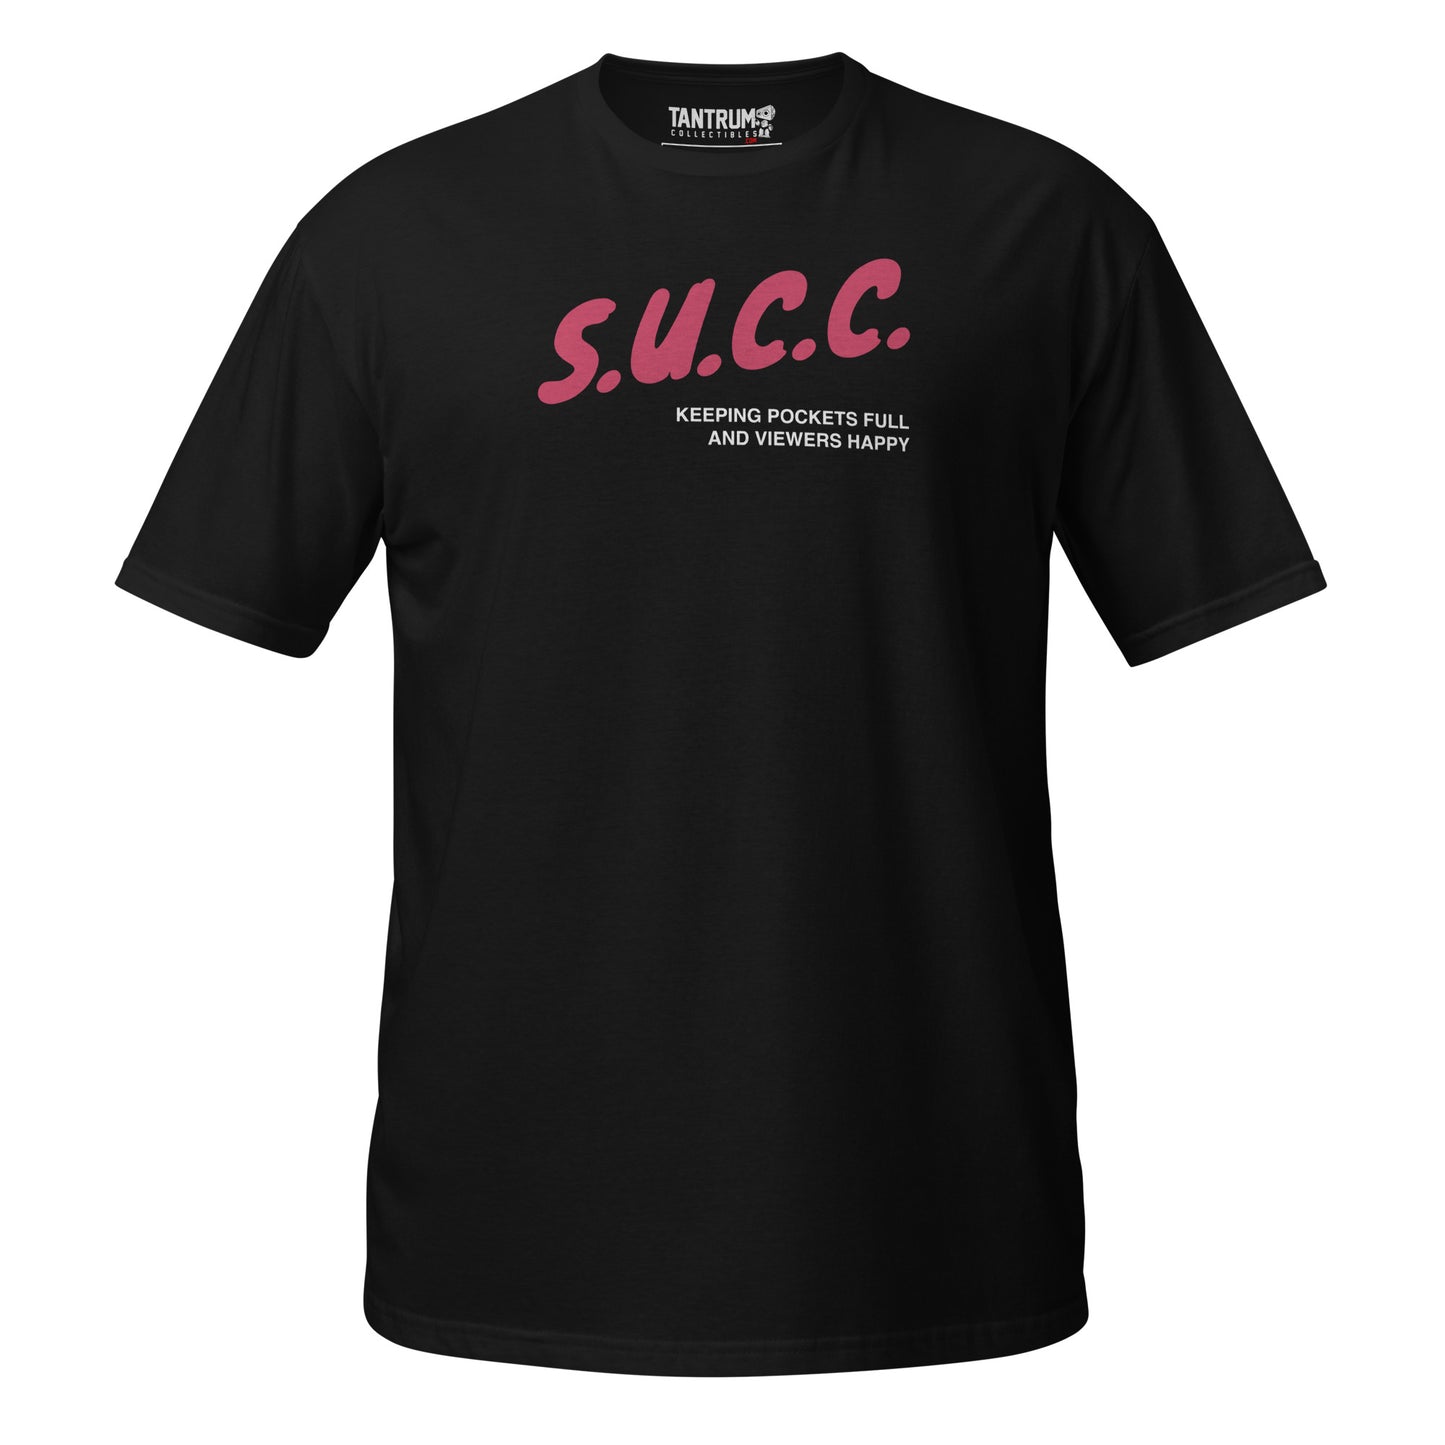 Crowd Control™ - Short-Sleeve Unisex T-Shirt - S.U.C.C.